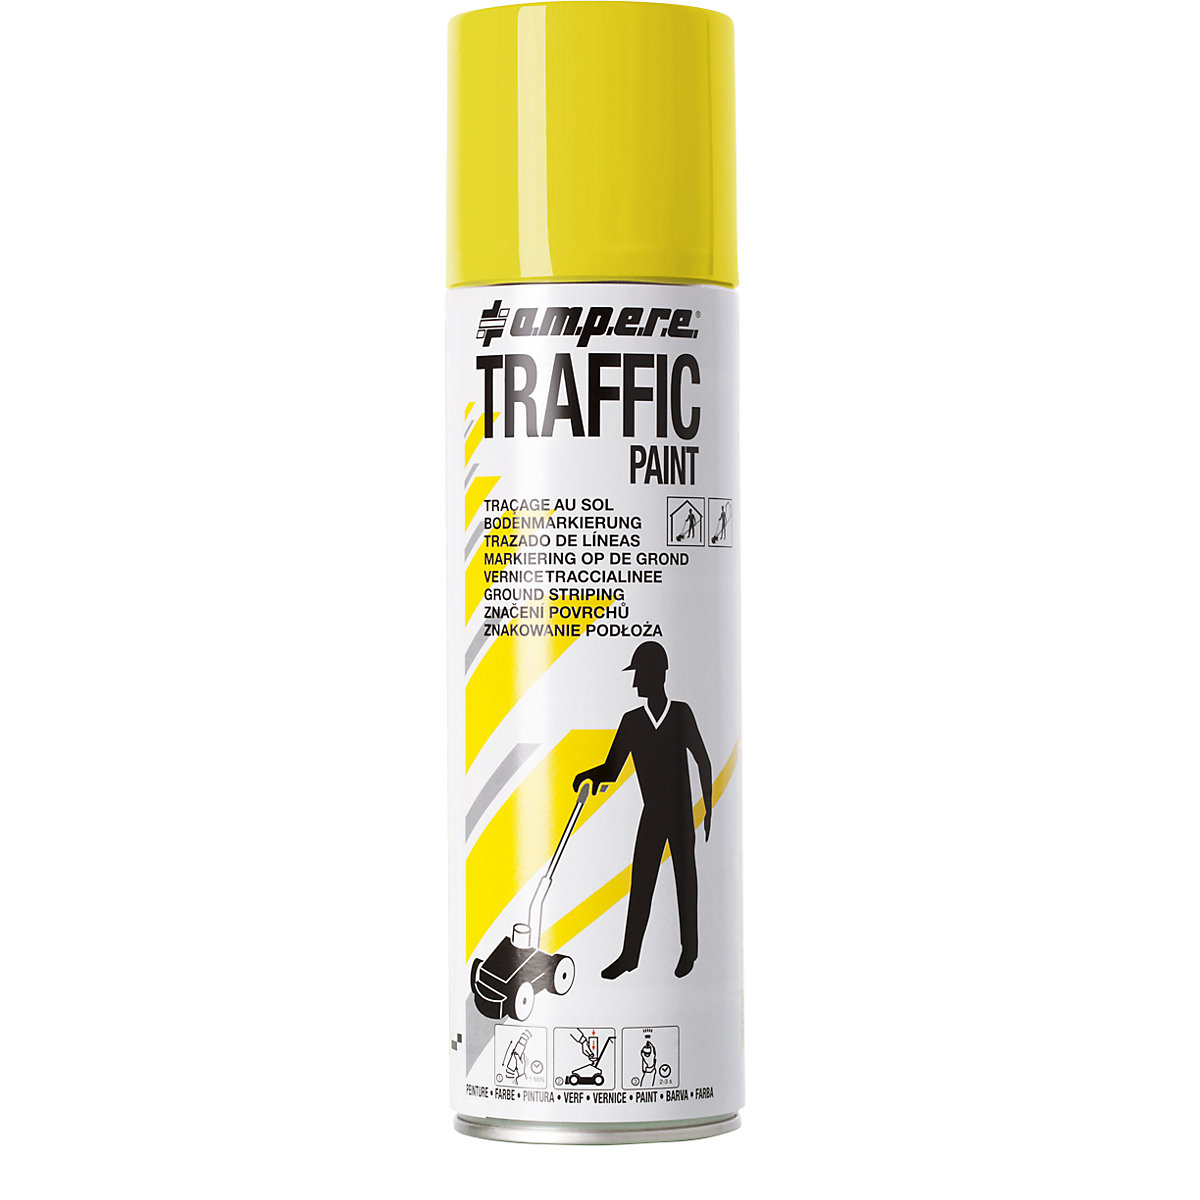 Markeerverf Traffic Paint® – Ampere, inhoud 500 ml, VE = 12 spuitbussen, geel-3